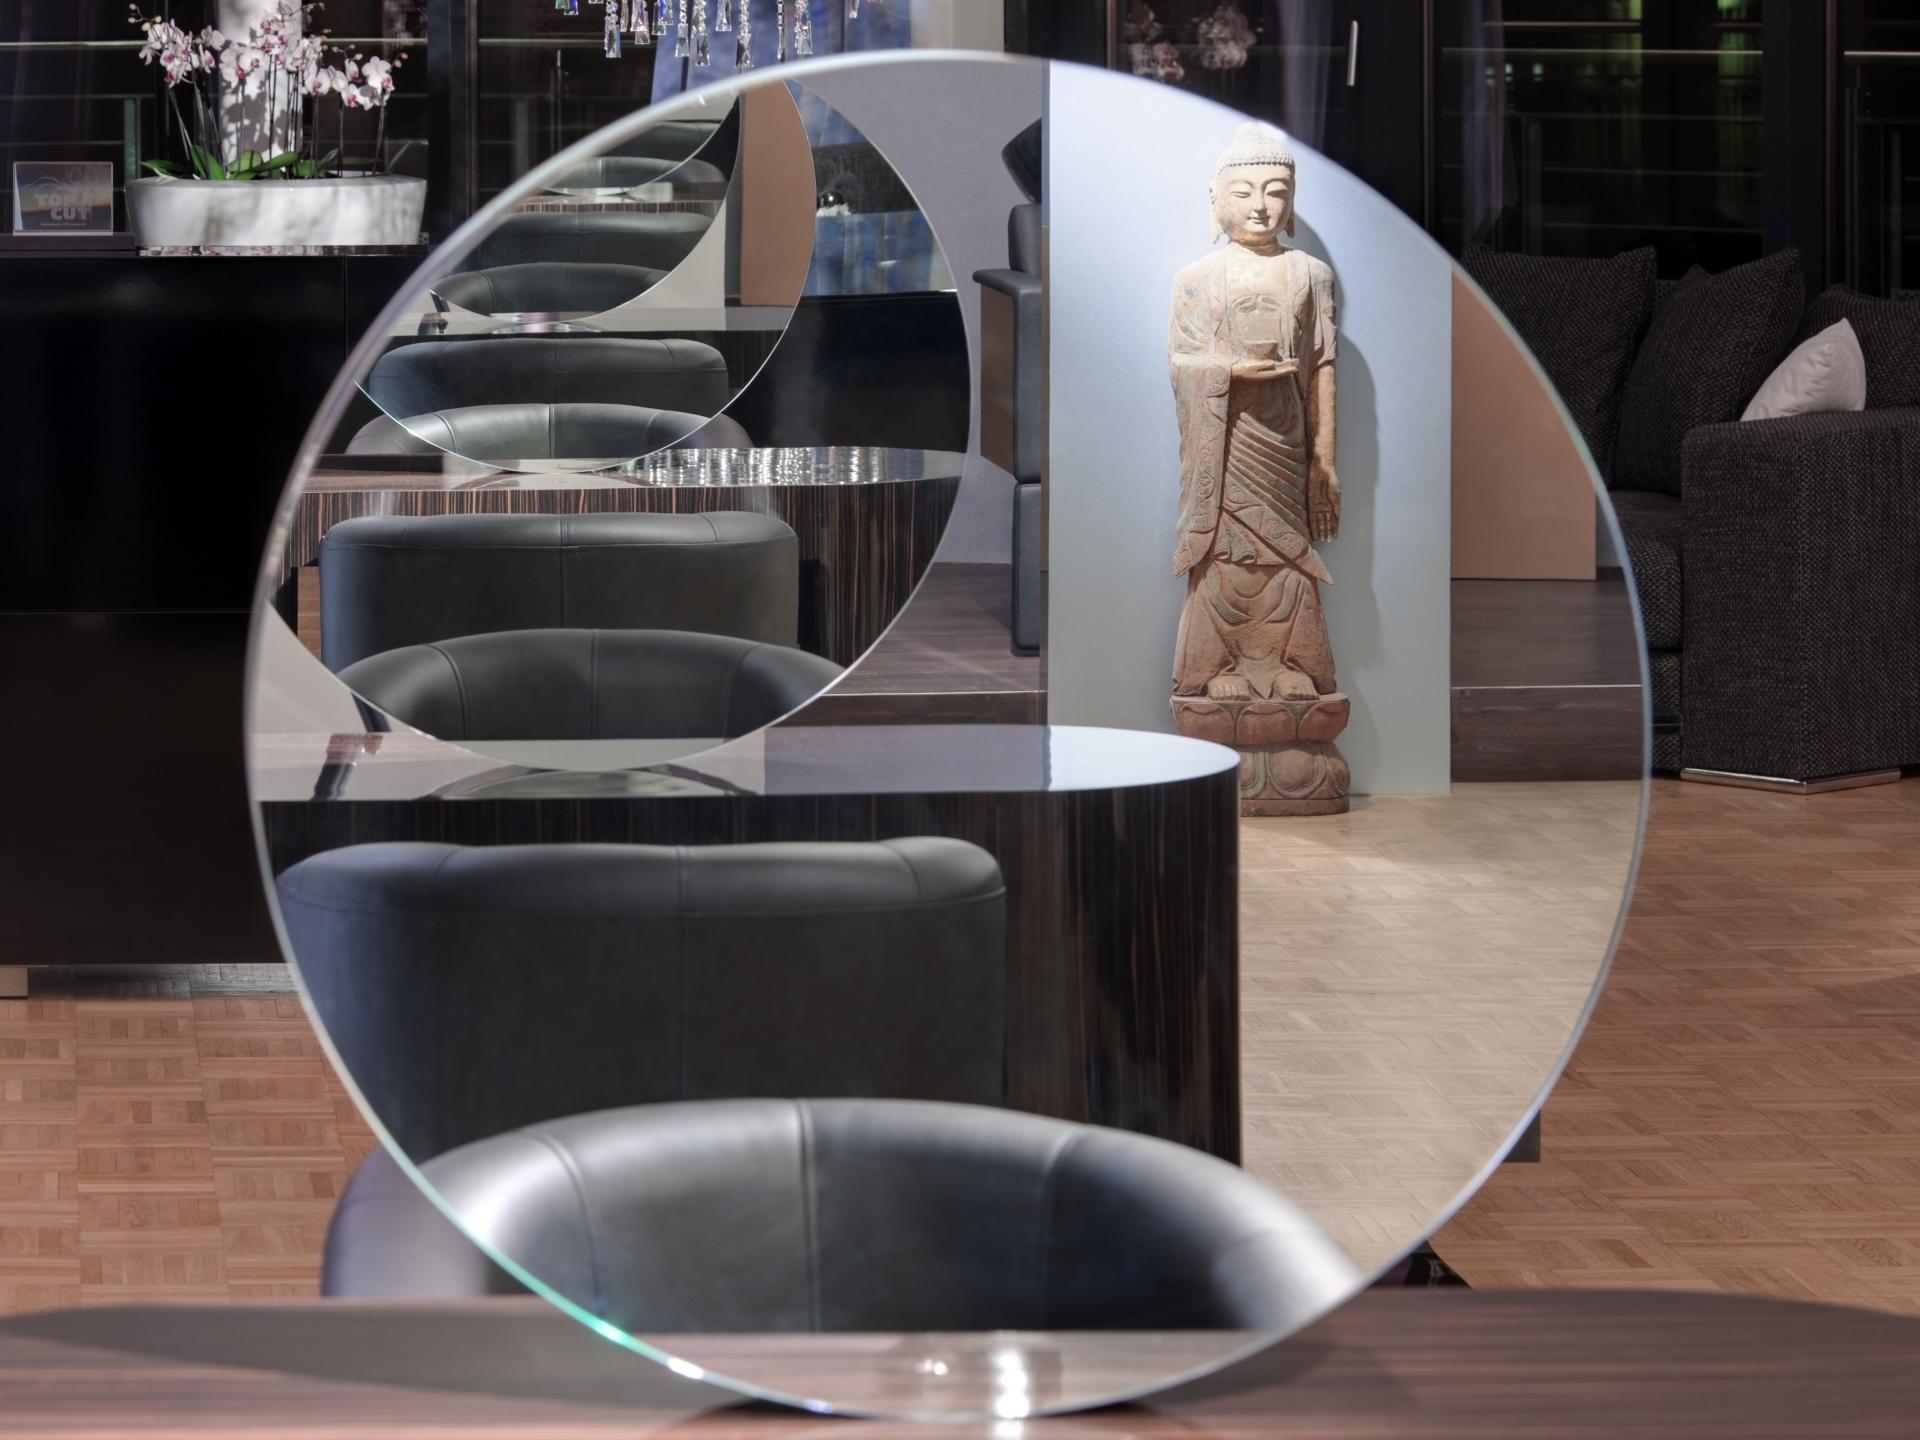 Salon Dennis Creuzberg #spiegel #penthouse #asiadeko ©www.berlinrodeo.com